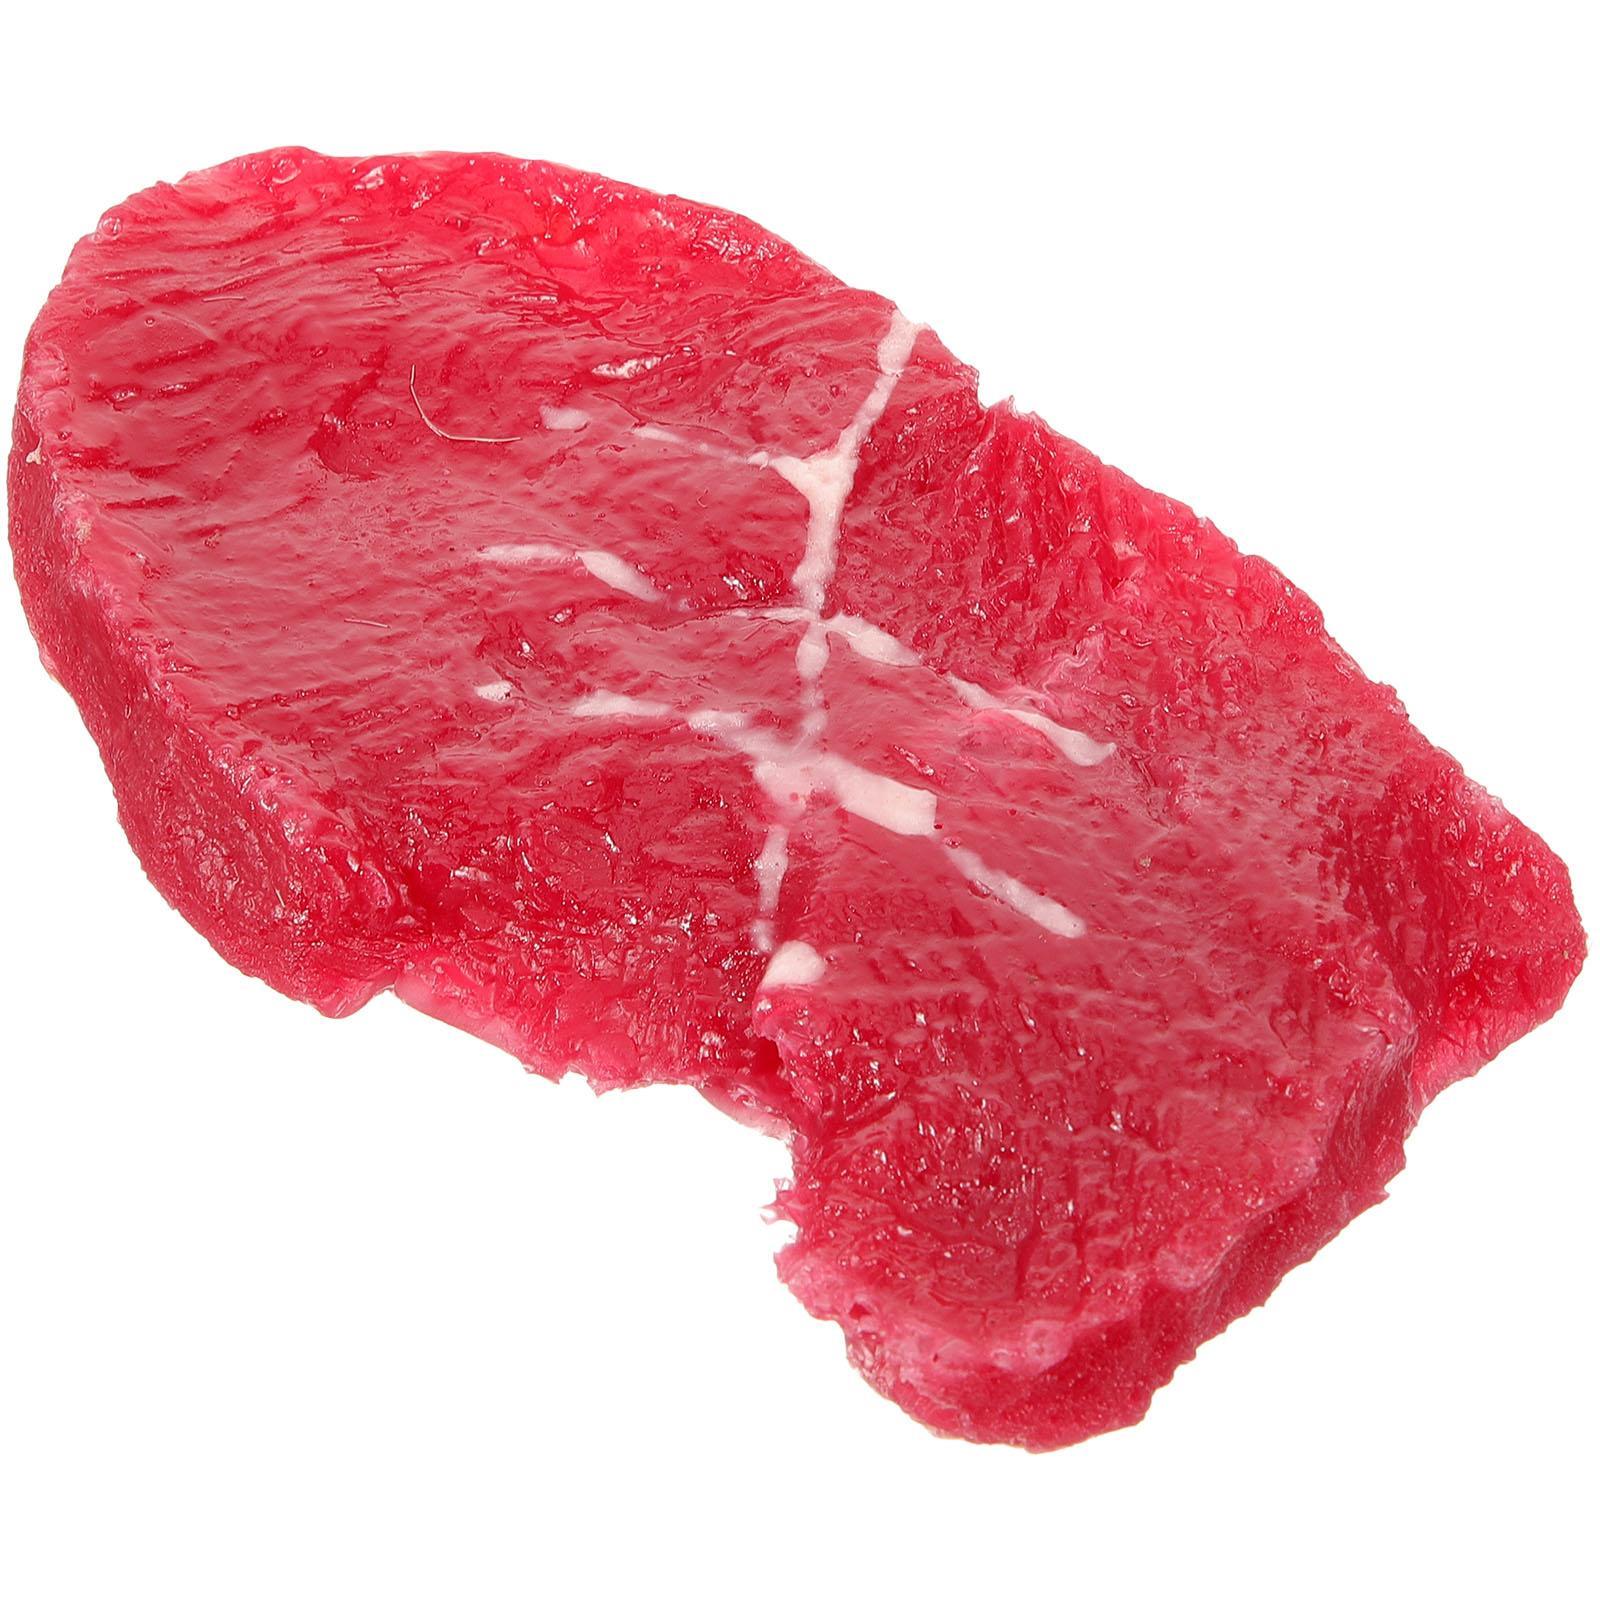 Creative Decorative Fake Meat Decoration Simulated Steak Decor Artificial Sliced Food Prop